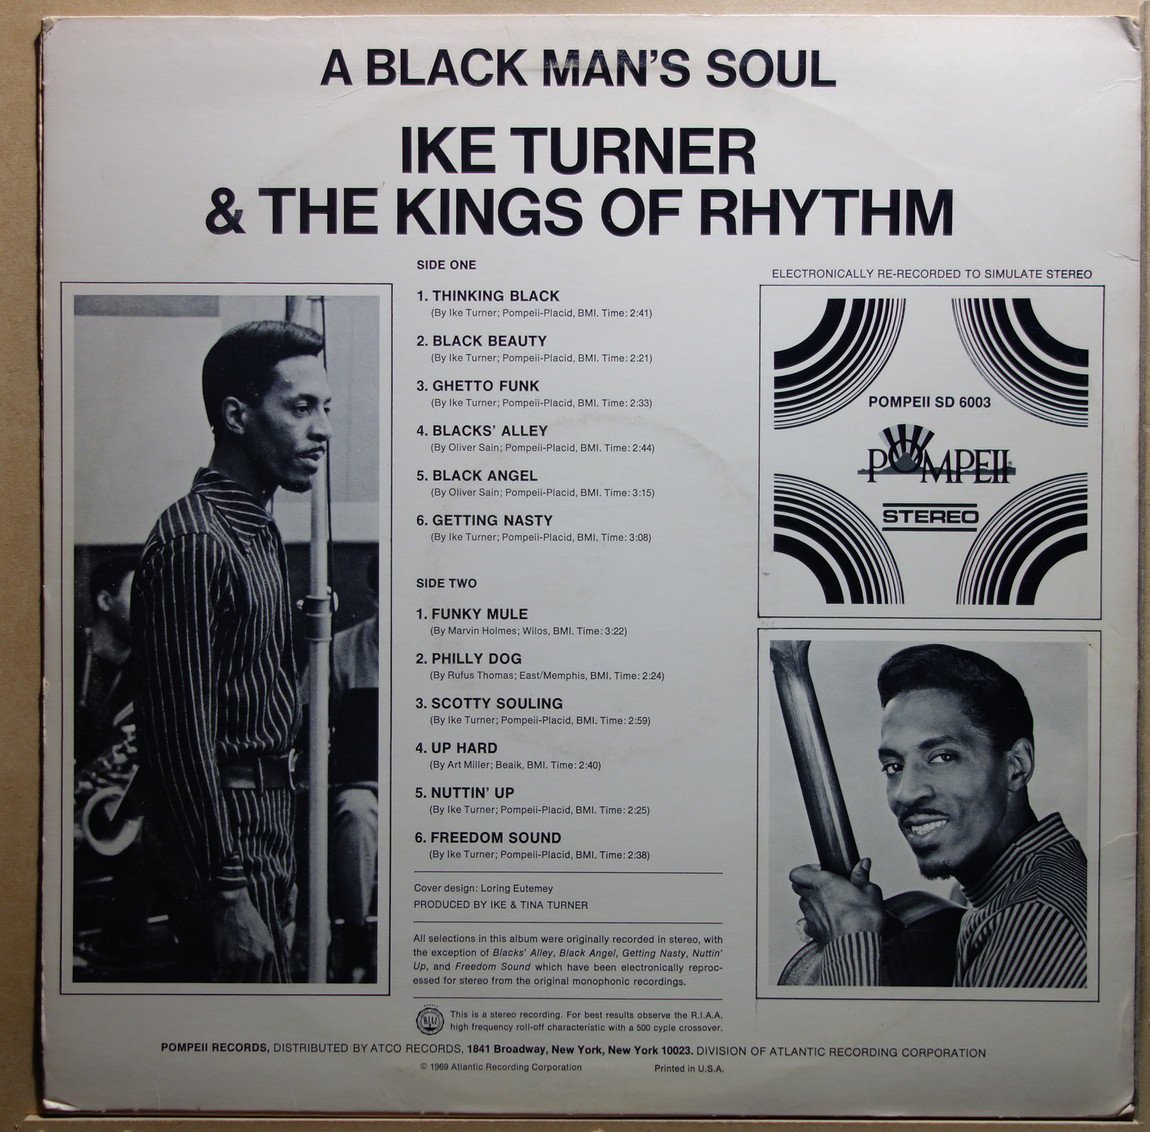 Ike Turner & The Kings Of Rhythm - A Black Man's Soul - Vinylian 